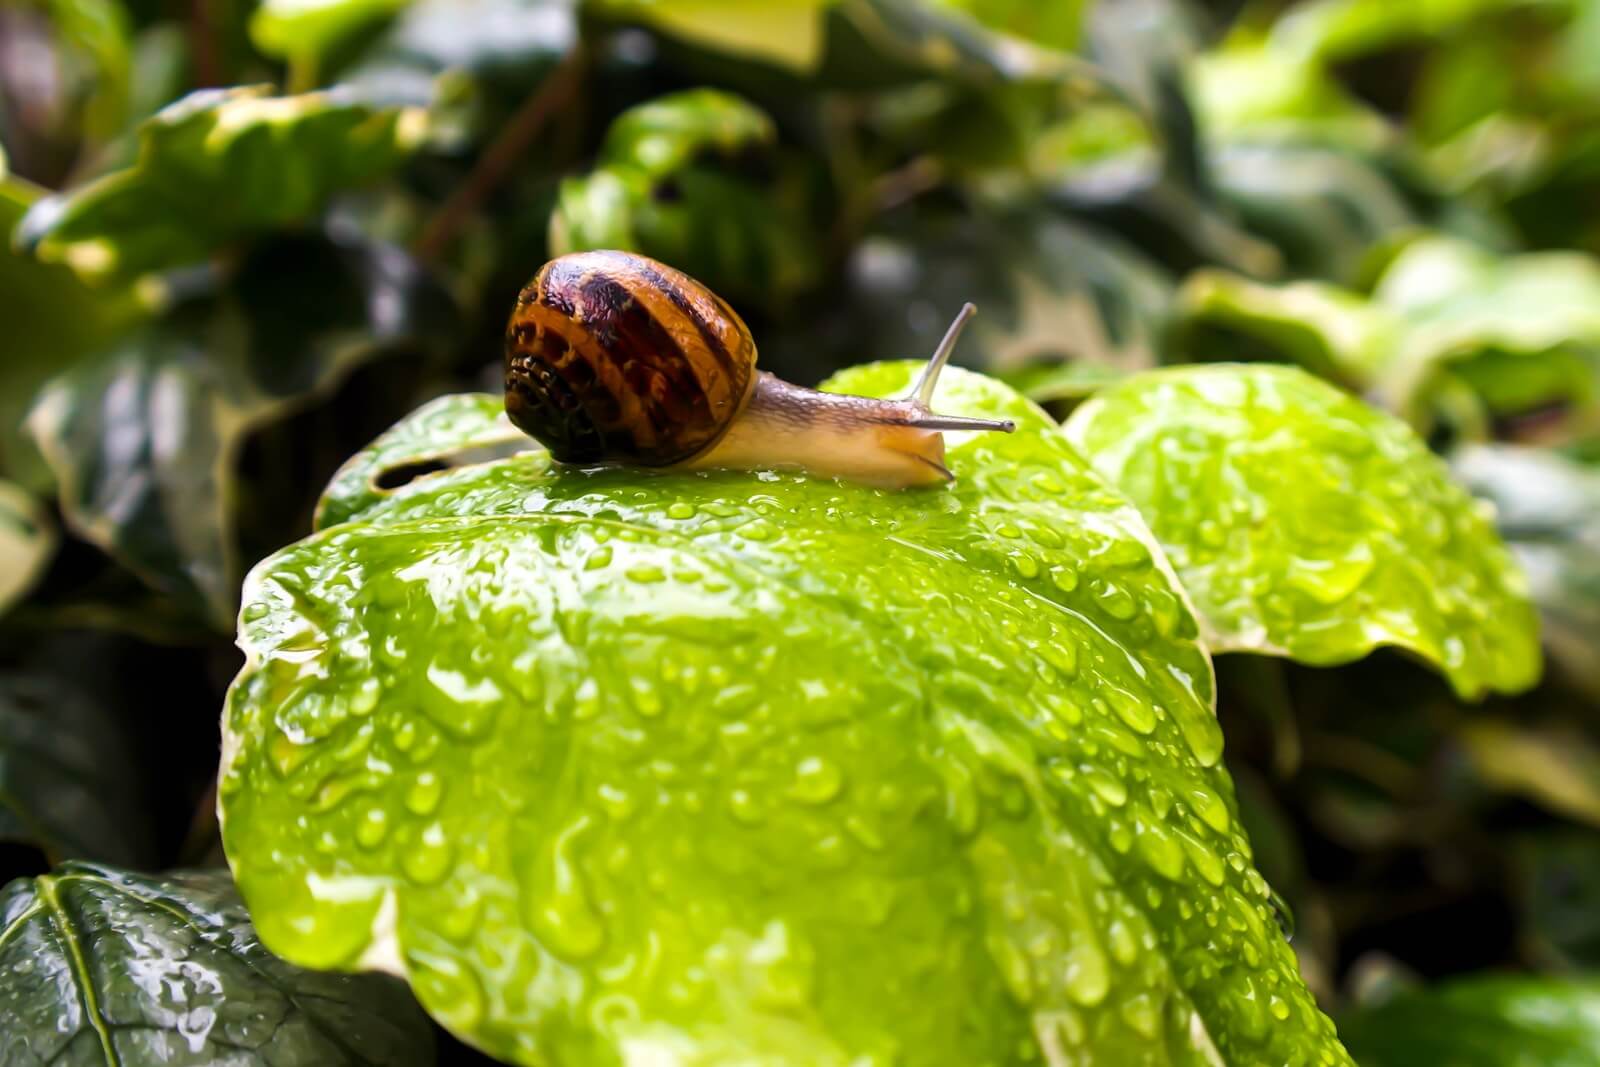 brown snail on green leaf